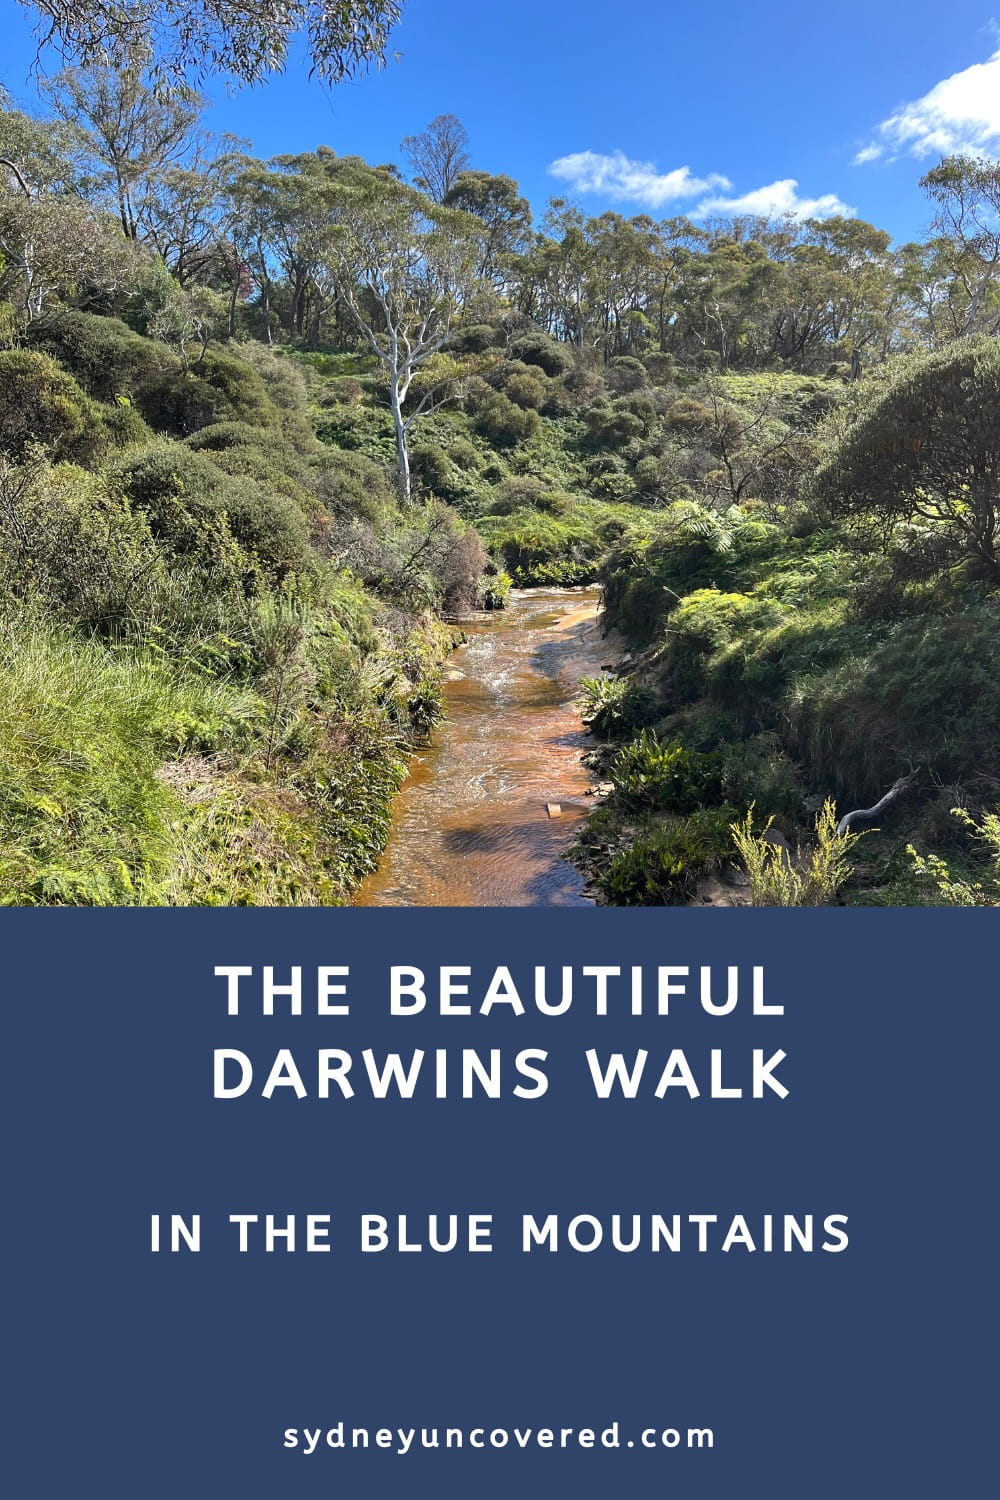 The beautiful Darwins Walk in the Blue Mountains